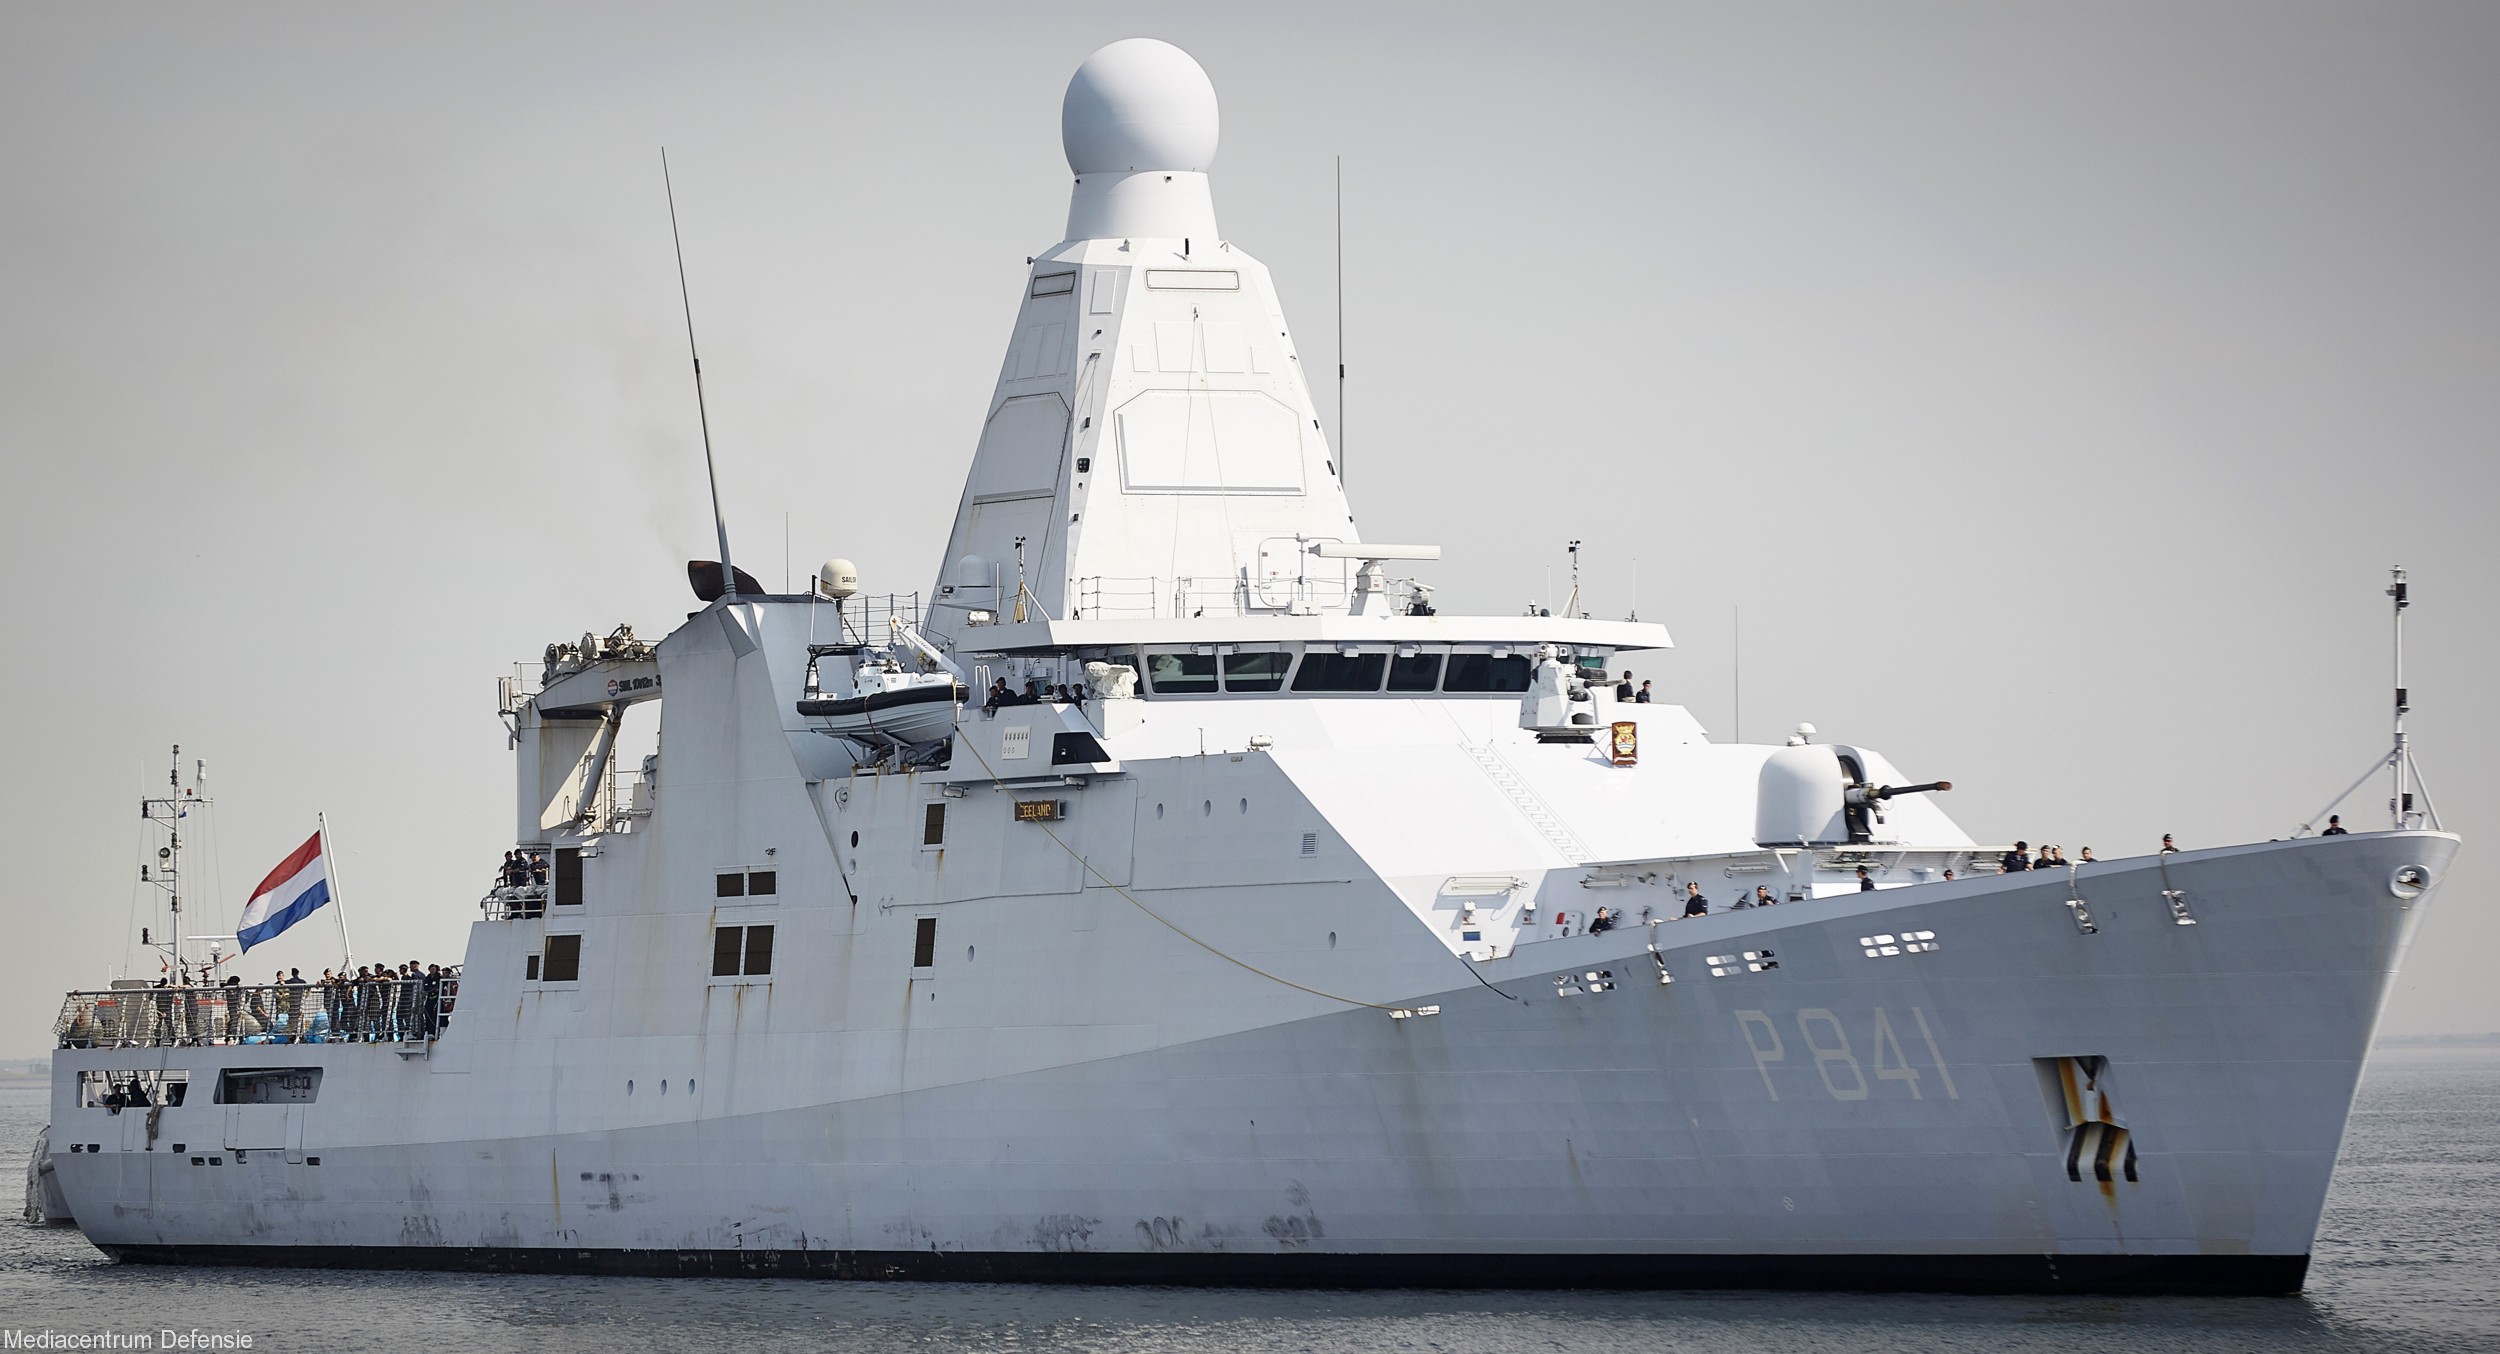 p-841 hnlms zeeland holland class offshore patrol vessel opv royal netherlands navy 06